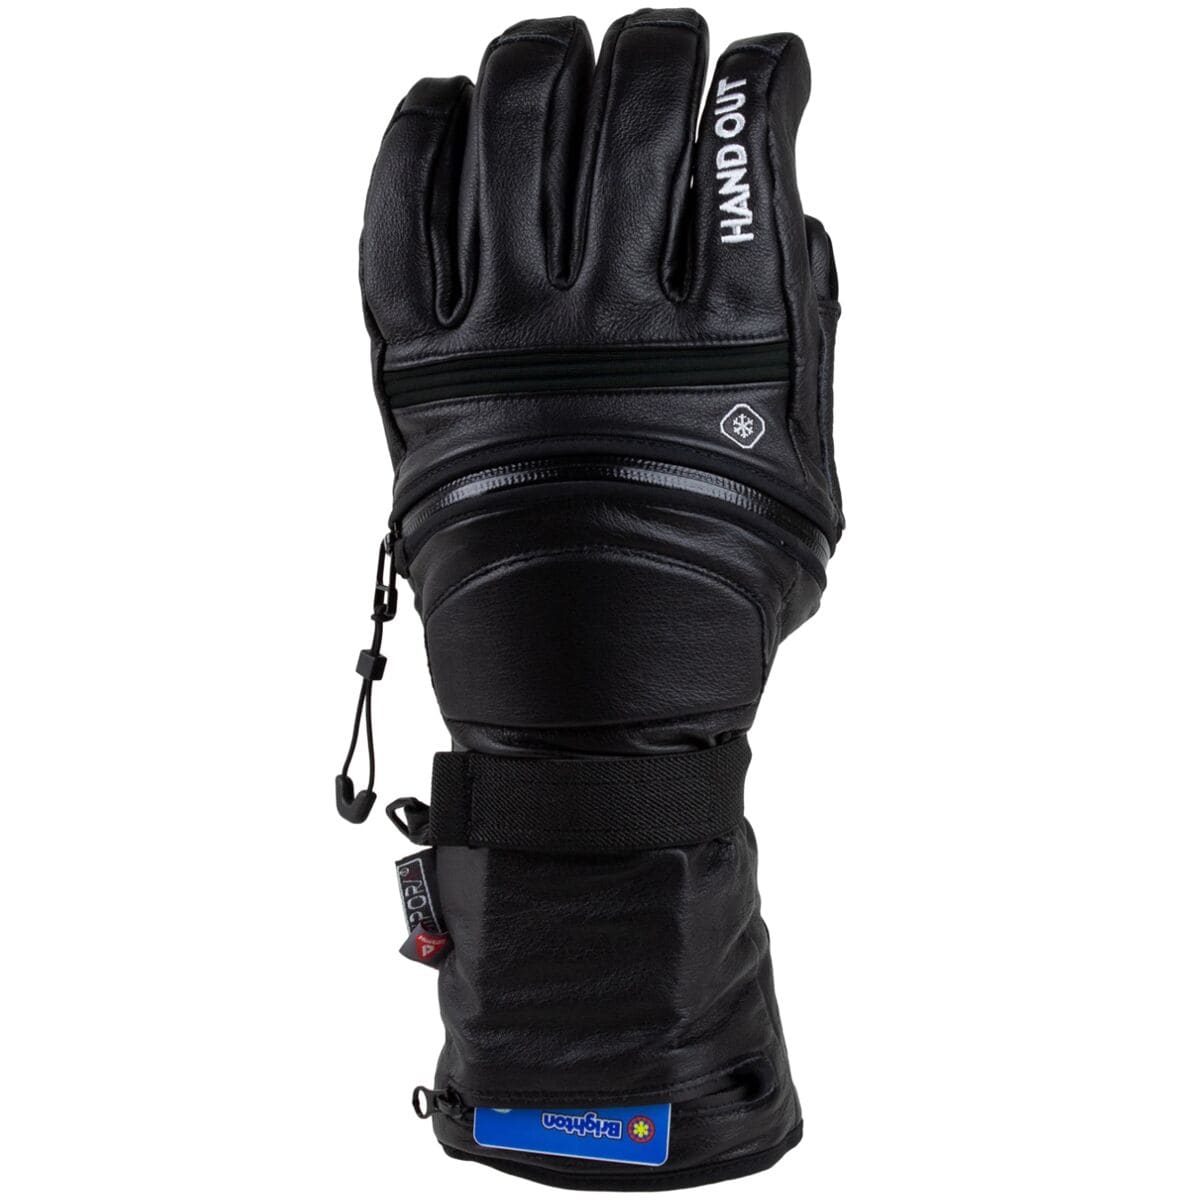 Hand Out Gloves Pro Ski Glove - Men's Black